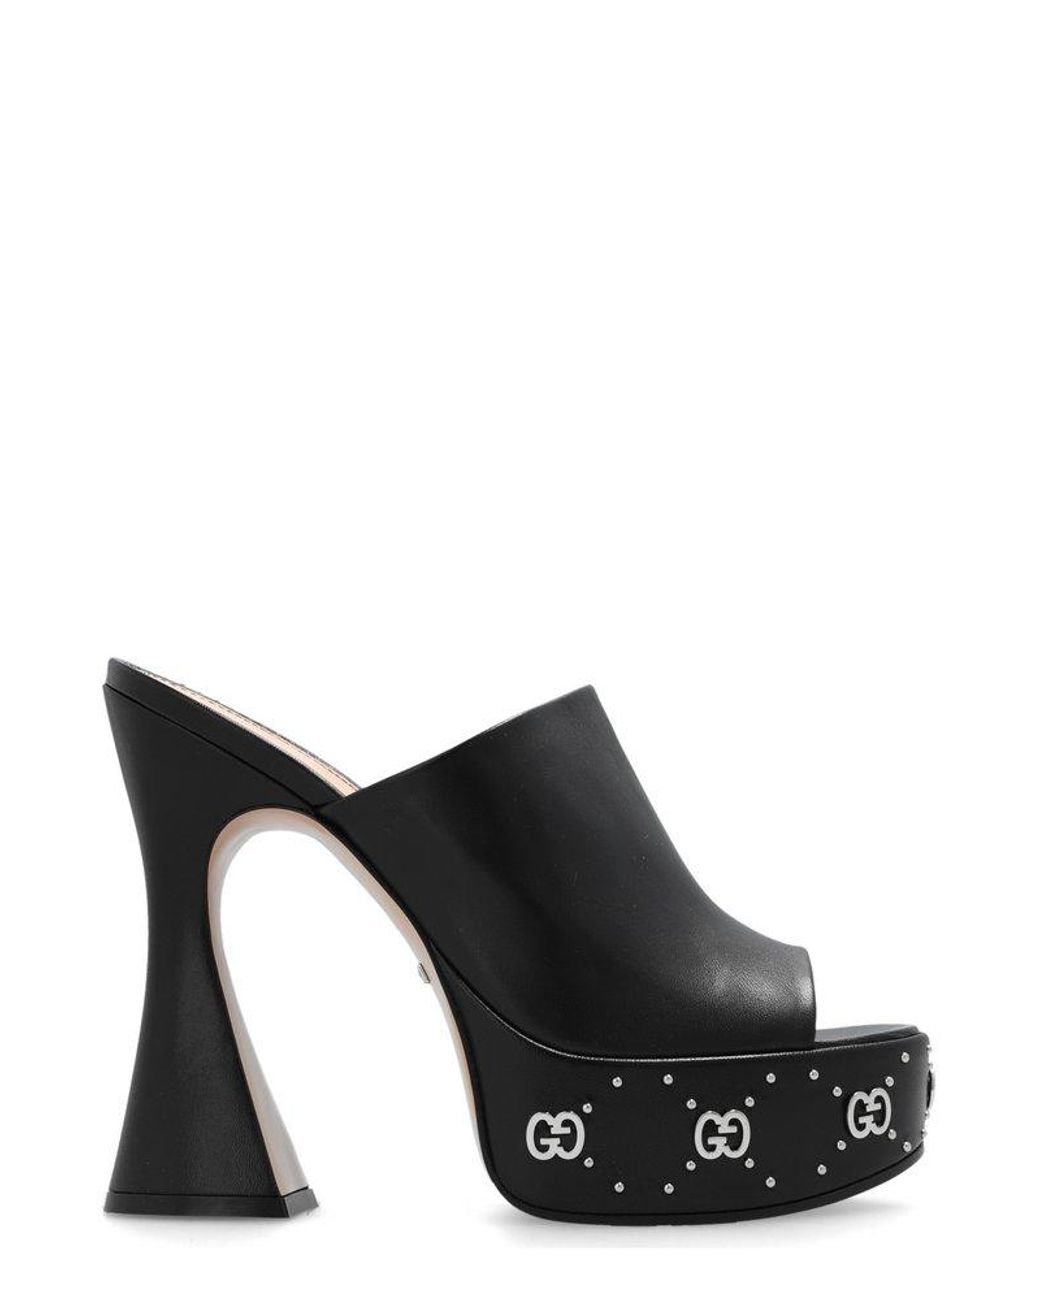 Gucci GG Logo Plaque Platform Sandals in Black | Lyst